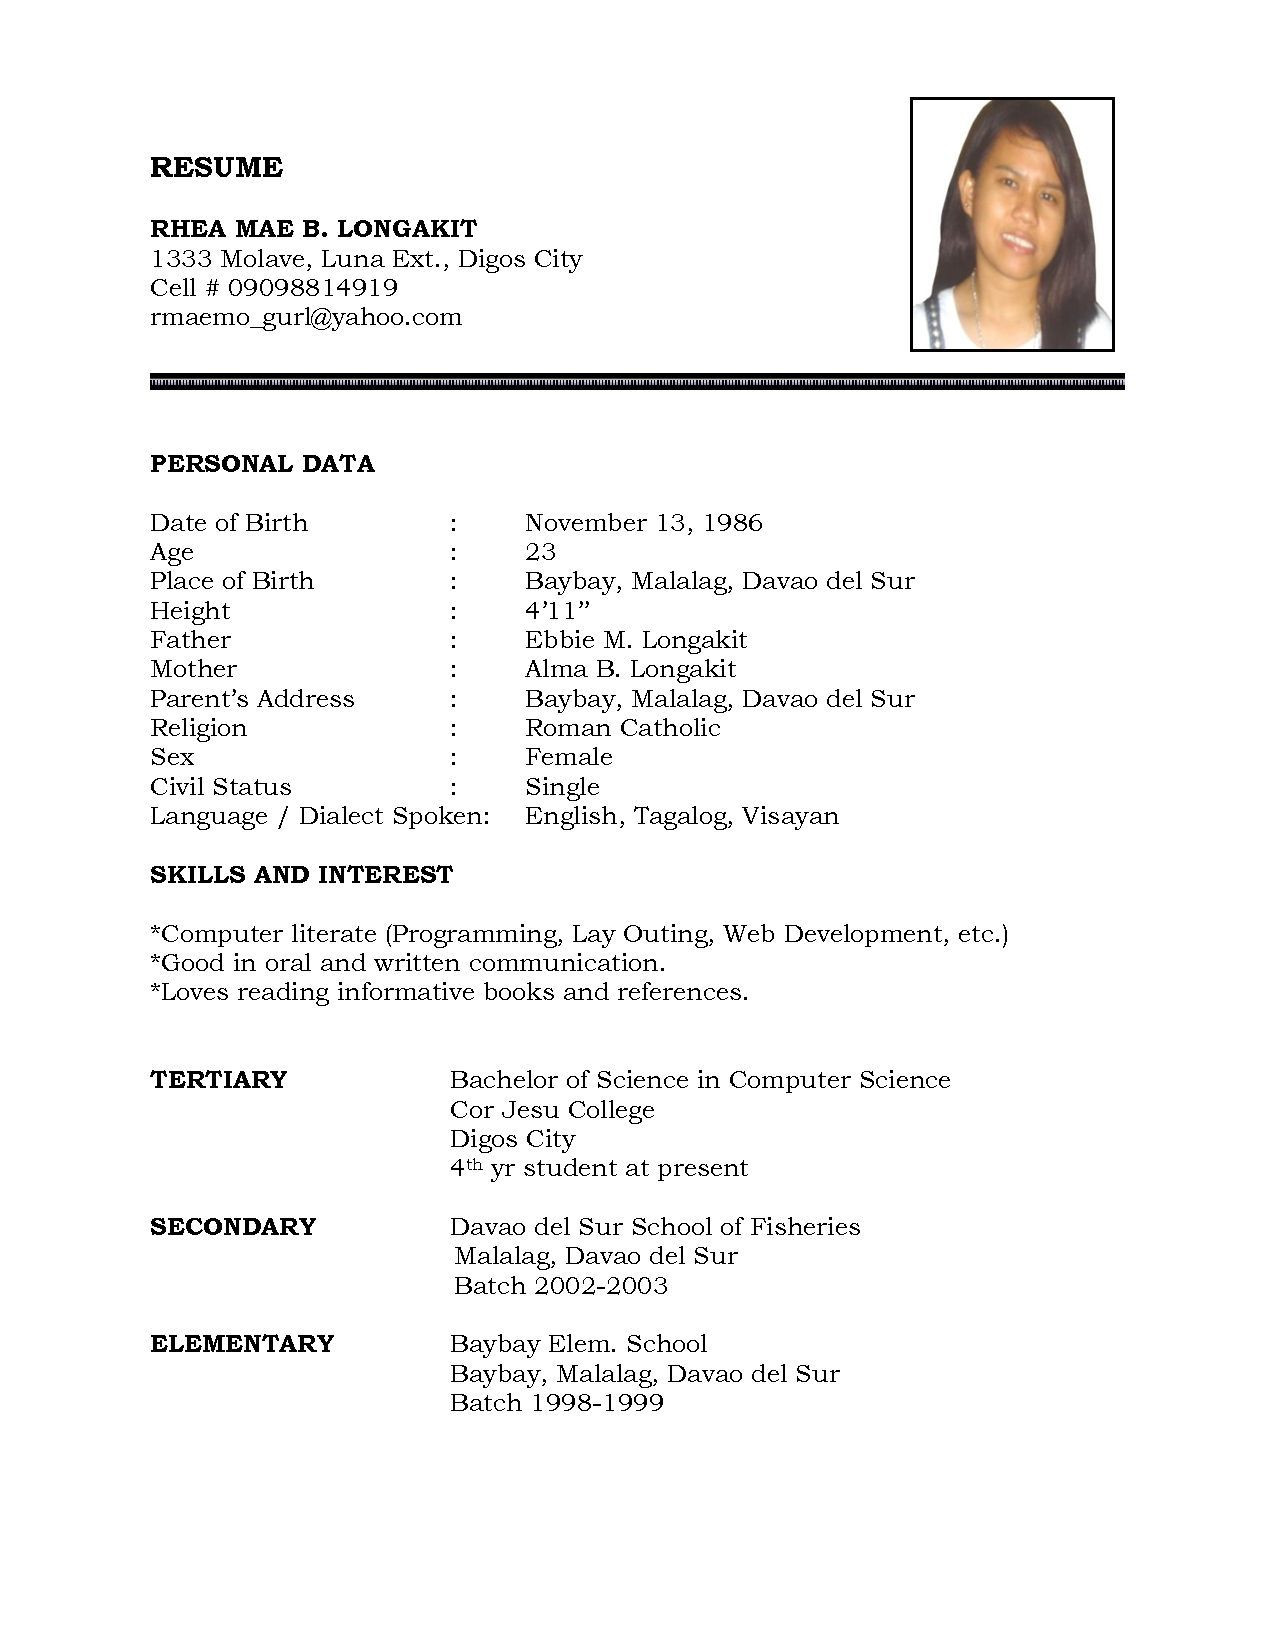 Resume Sample for Job Application Pdf Pin by Laurie Koitzsch Quick On Carissa B. Hernandez Job Resume …